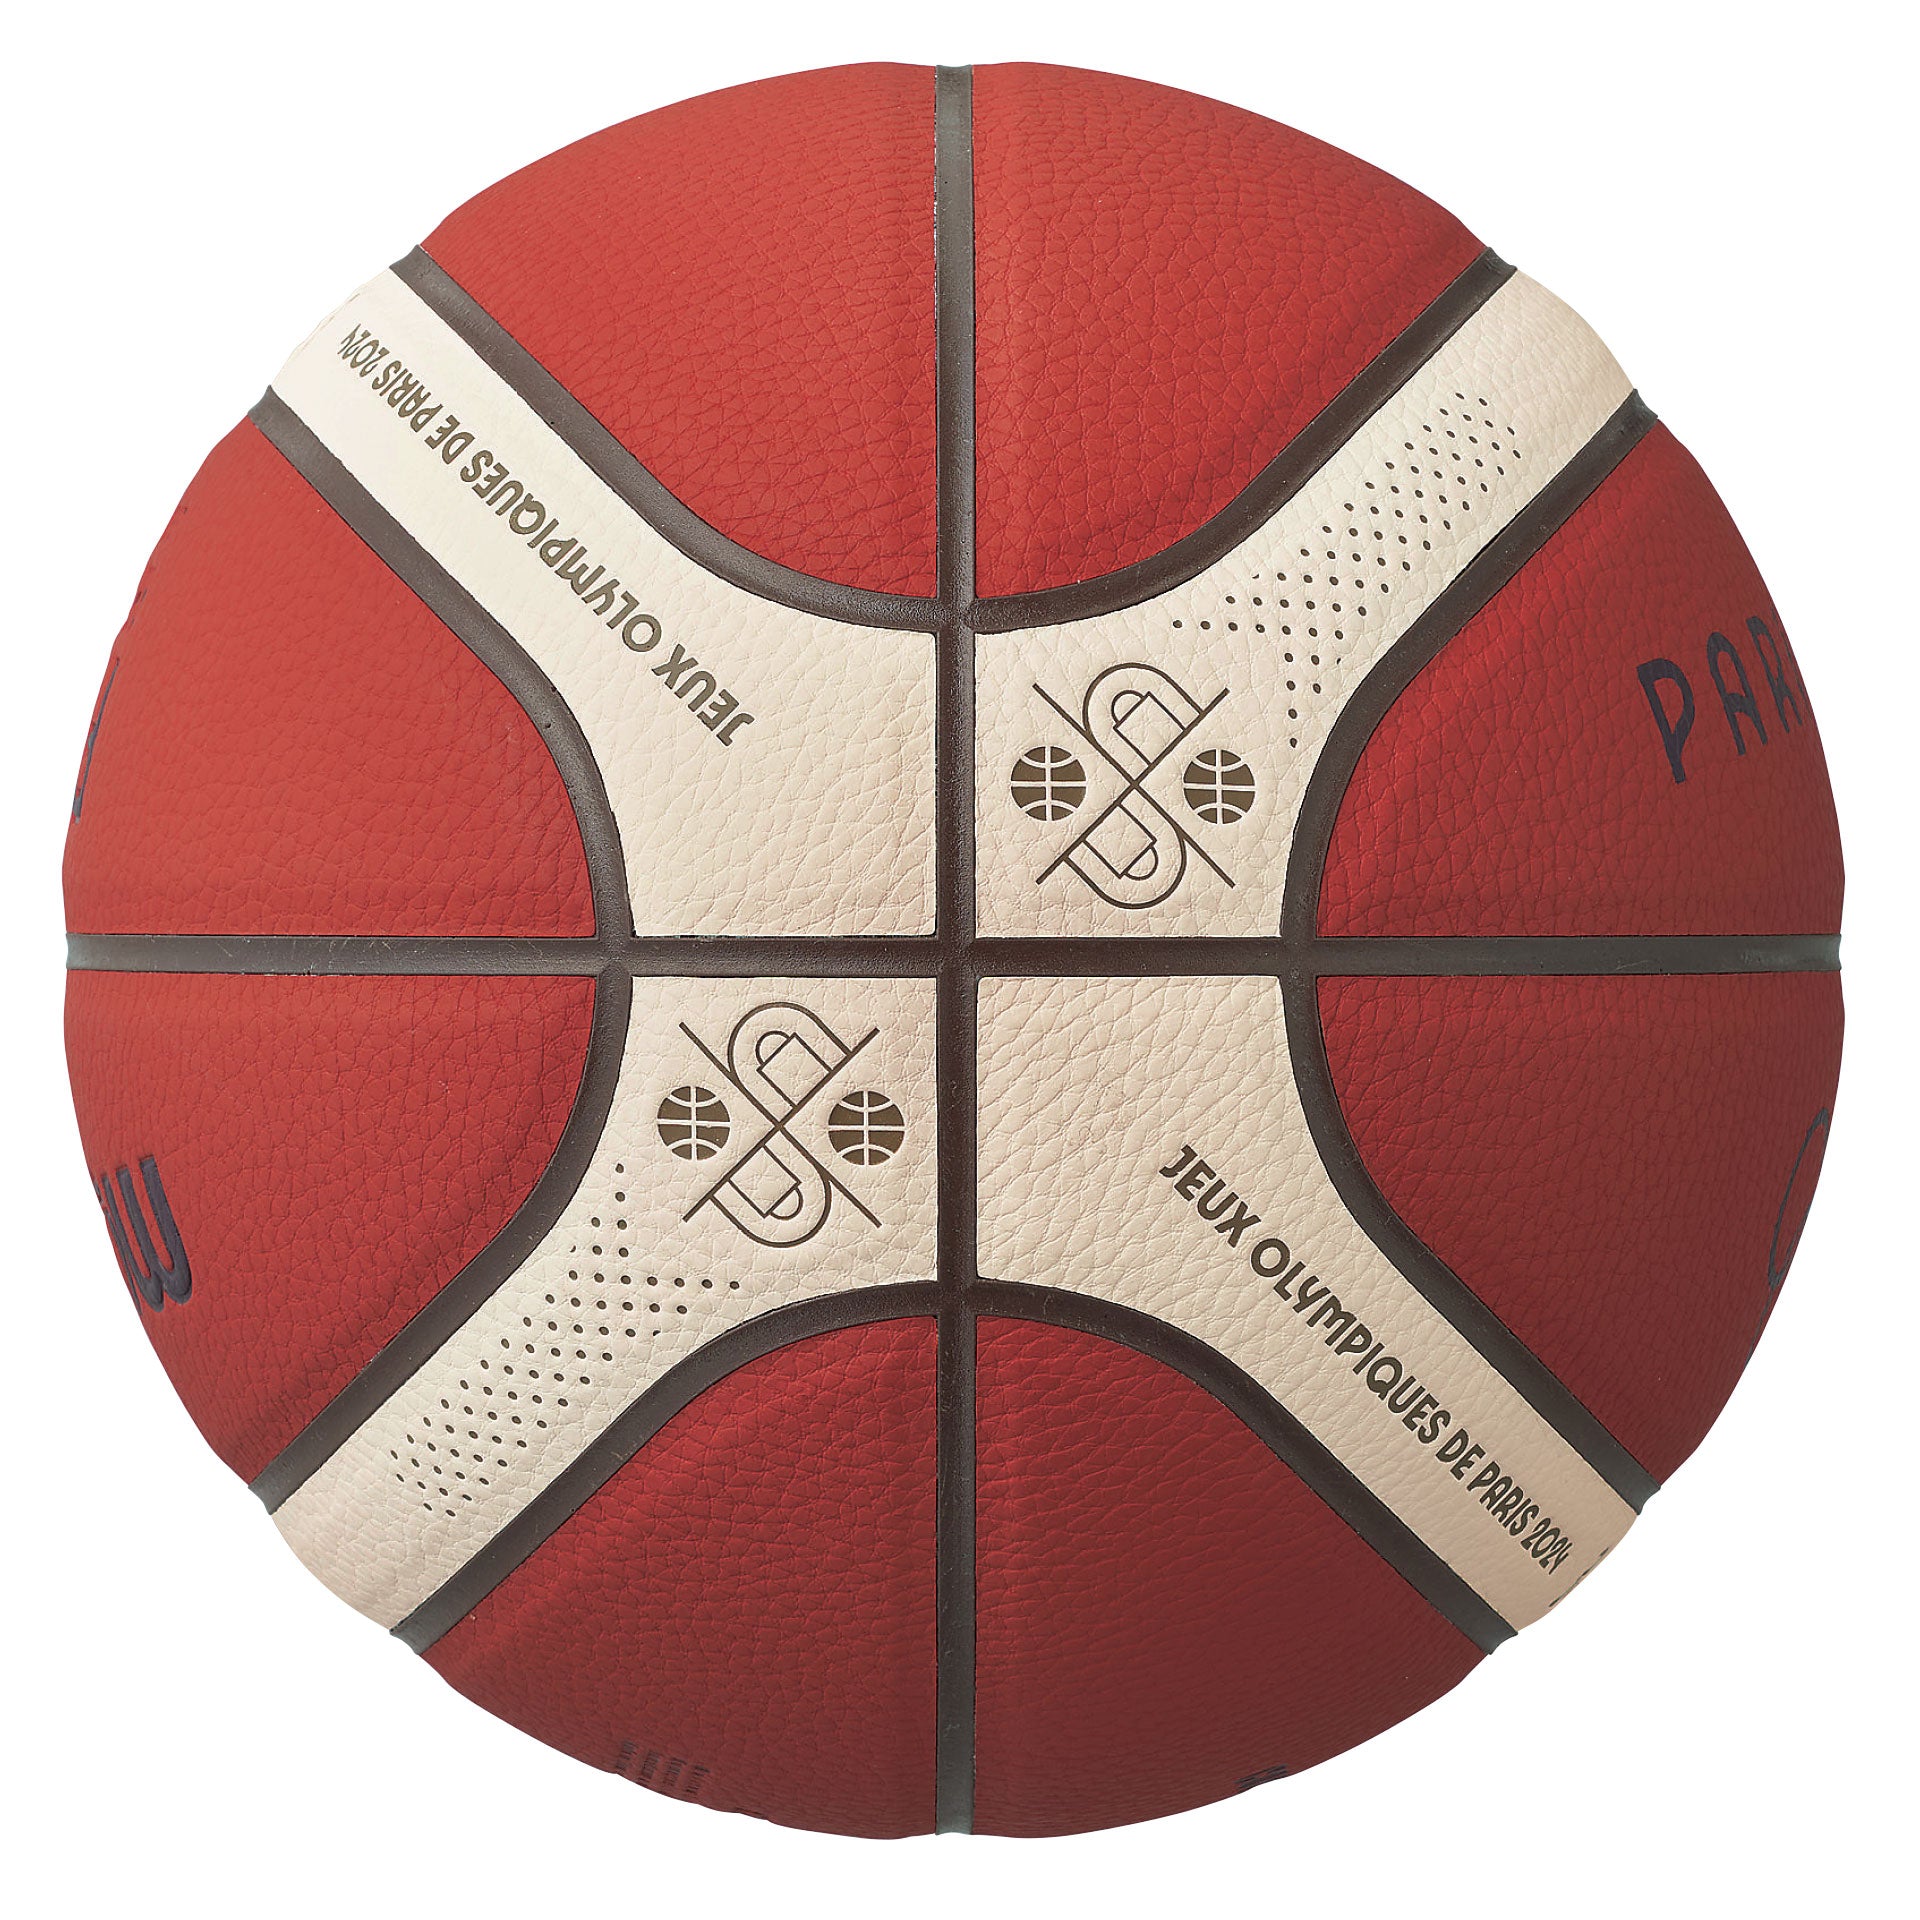 BG3800 Series Basketball - Olympic Games Paris 2024 Official Replica Ball